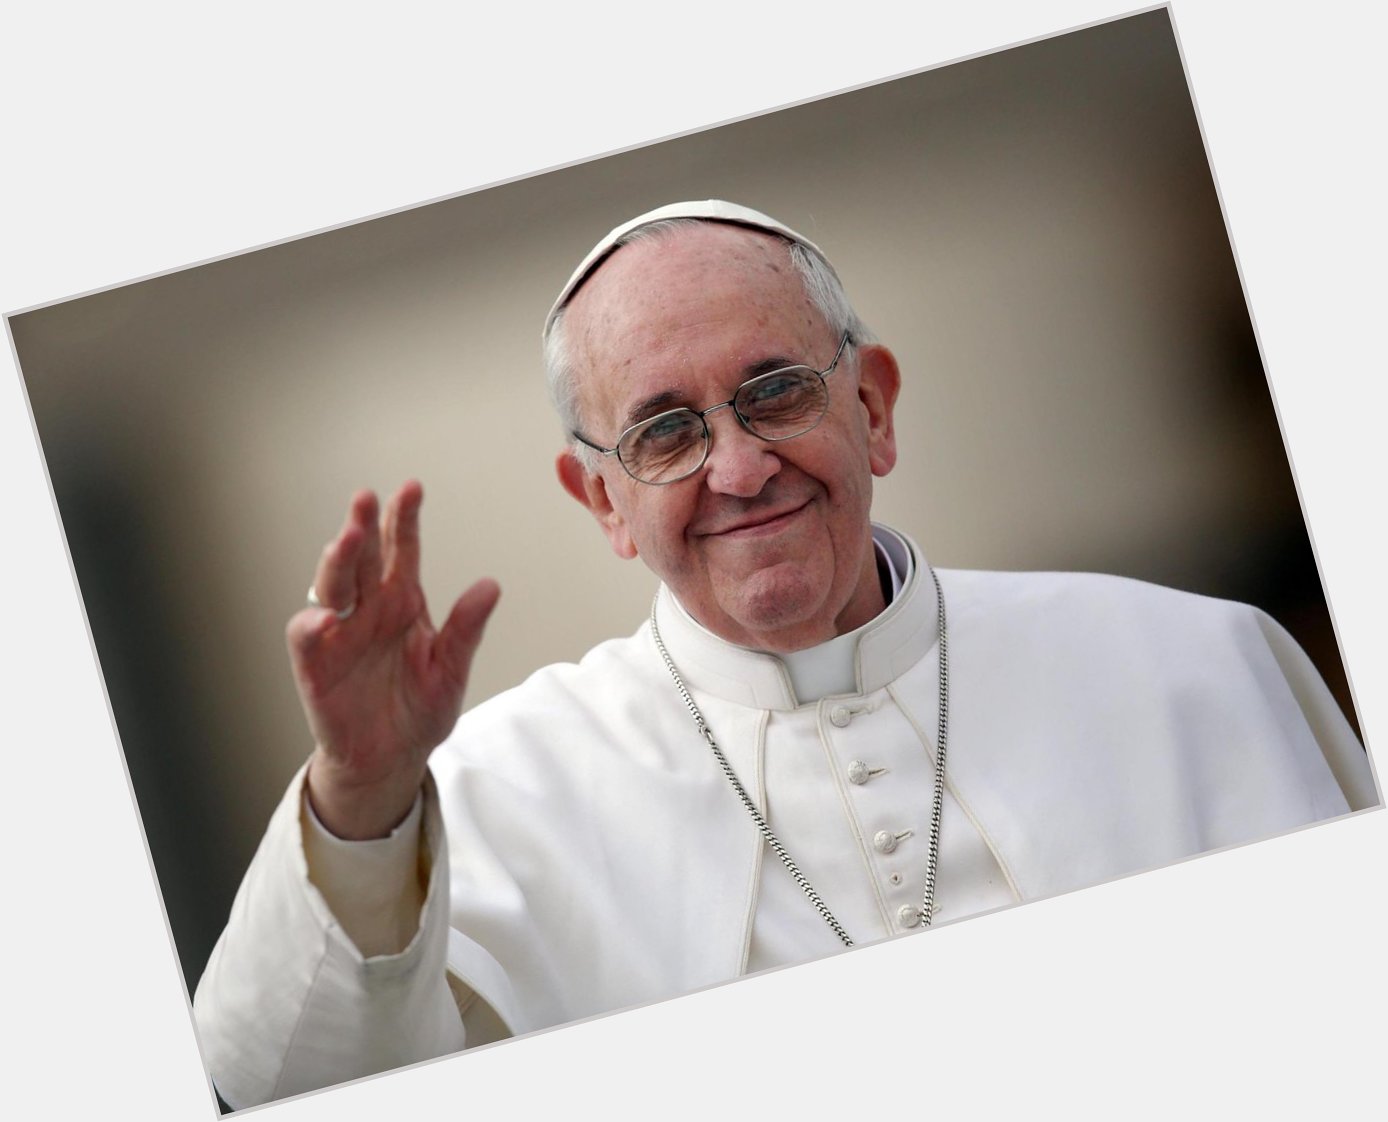 Wishing a Happy Birthday. Pope Francis celebrates his 78th birthday today! 